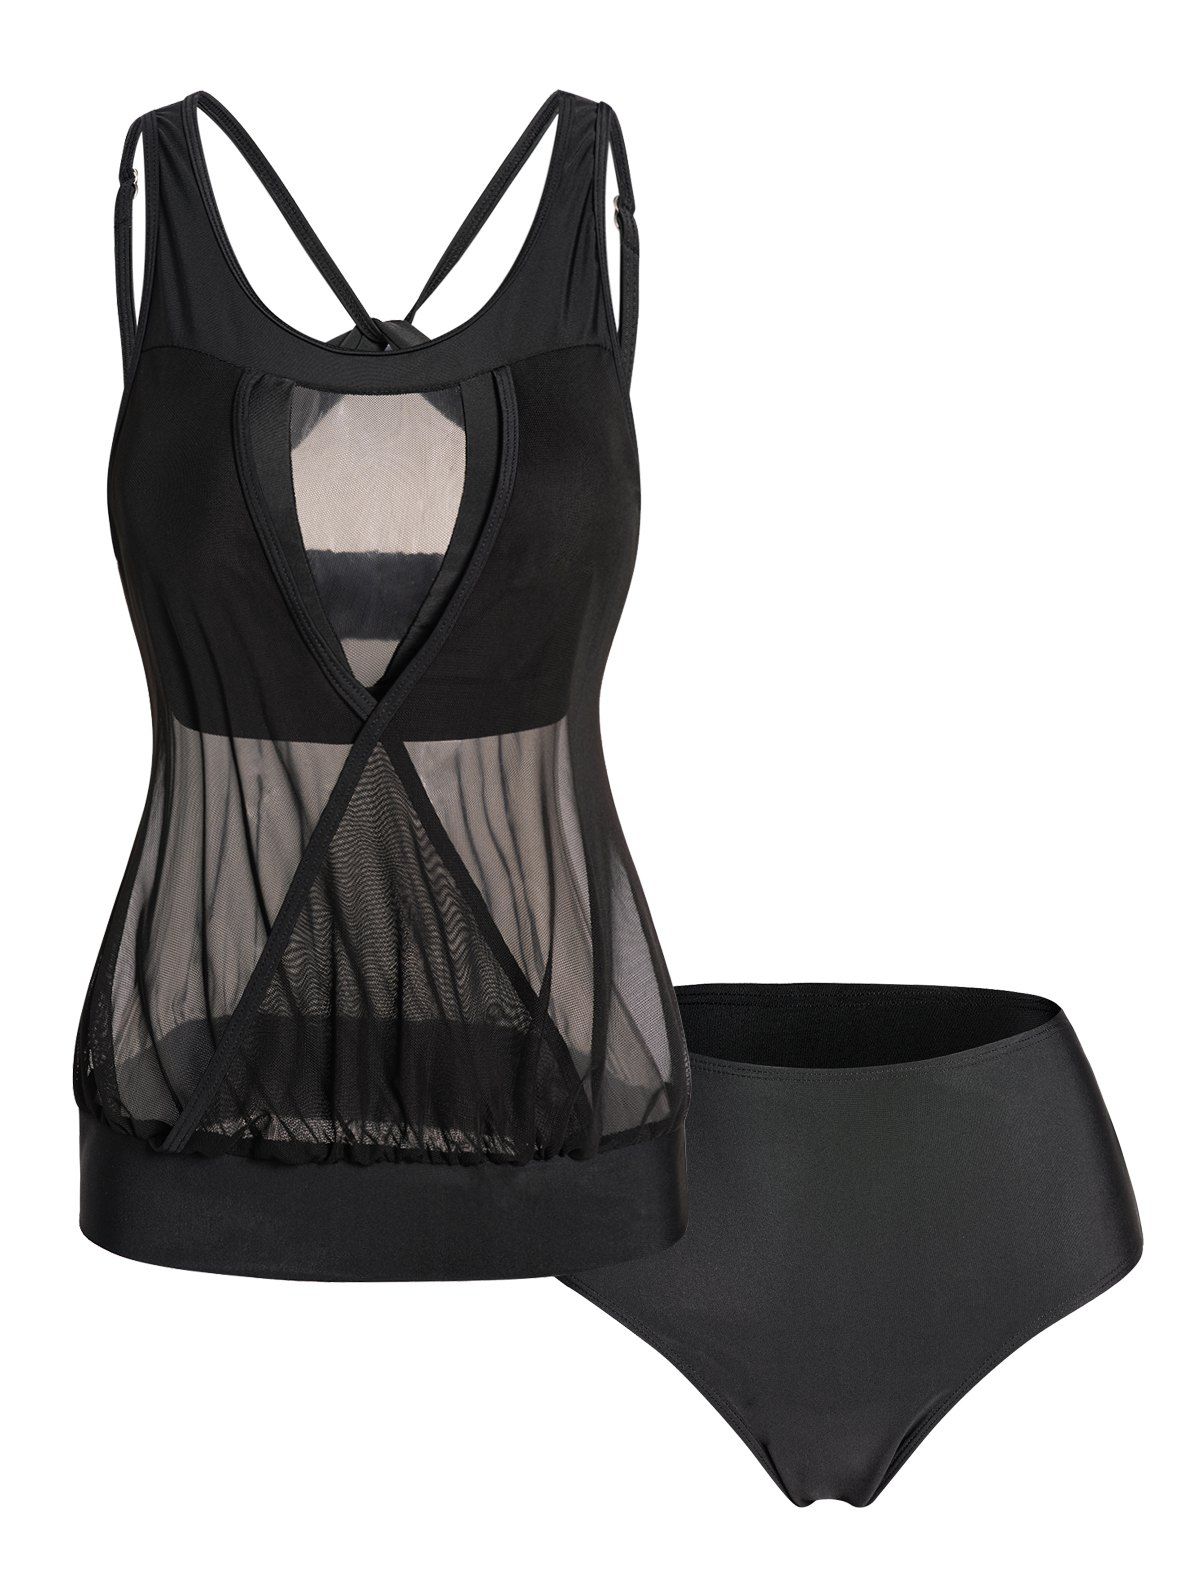 Modest Tankini Swimsuit Surplice Mesh Backless Swimwear Padded Tummy Control Bathing Suit - BLACK XL